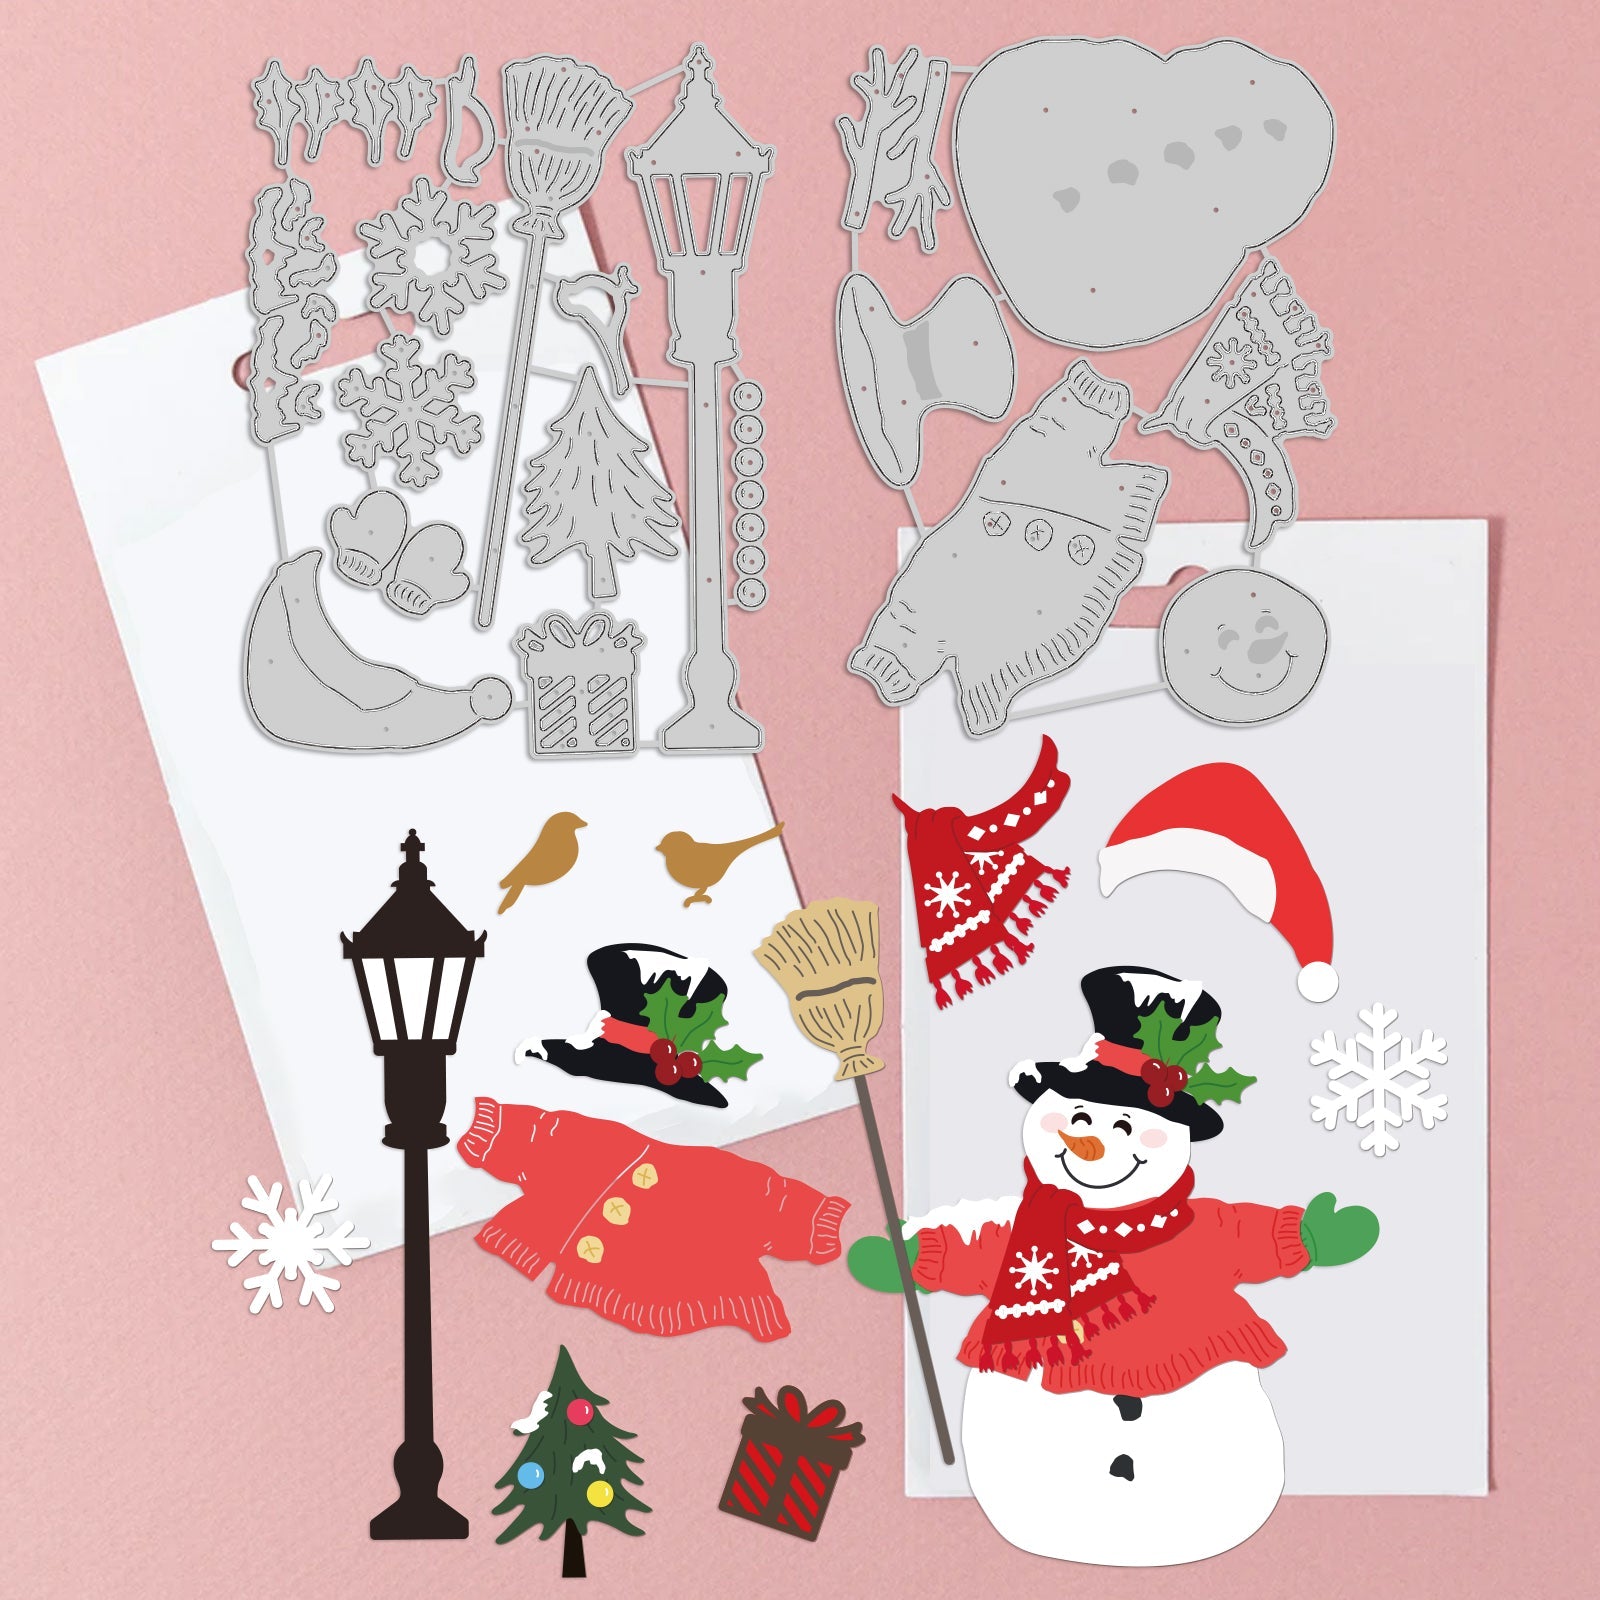 CRASPIRE Christmas Snowman, Winter Carbon Steel Cutting Dies Stencils, for DIY Scrapbooking/Photo Album, Decorative Embossing DIY Paper Card